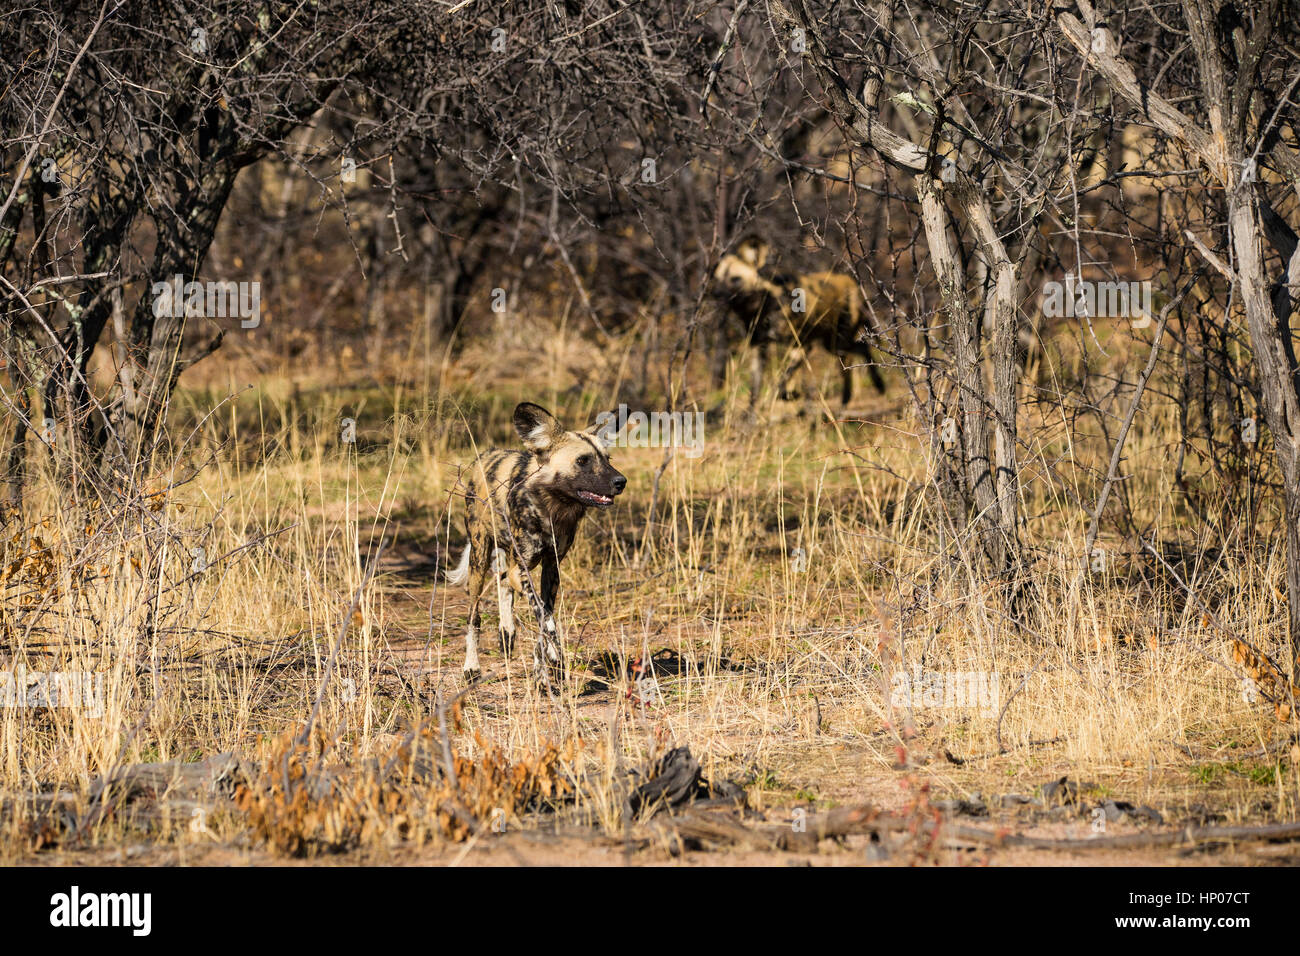 Afrikanischer Wildhund, Lycaon pictus, Okonjima, Namibia, Afrika, von Monika Hrdinova/Dembinsky Foto Assoc Stockfoto